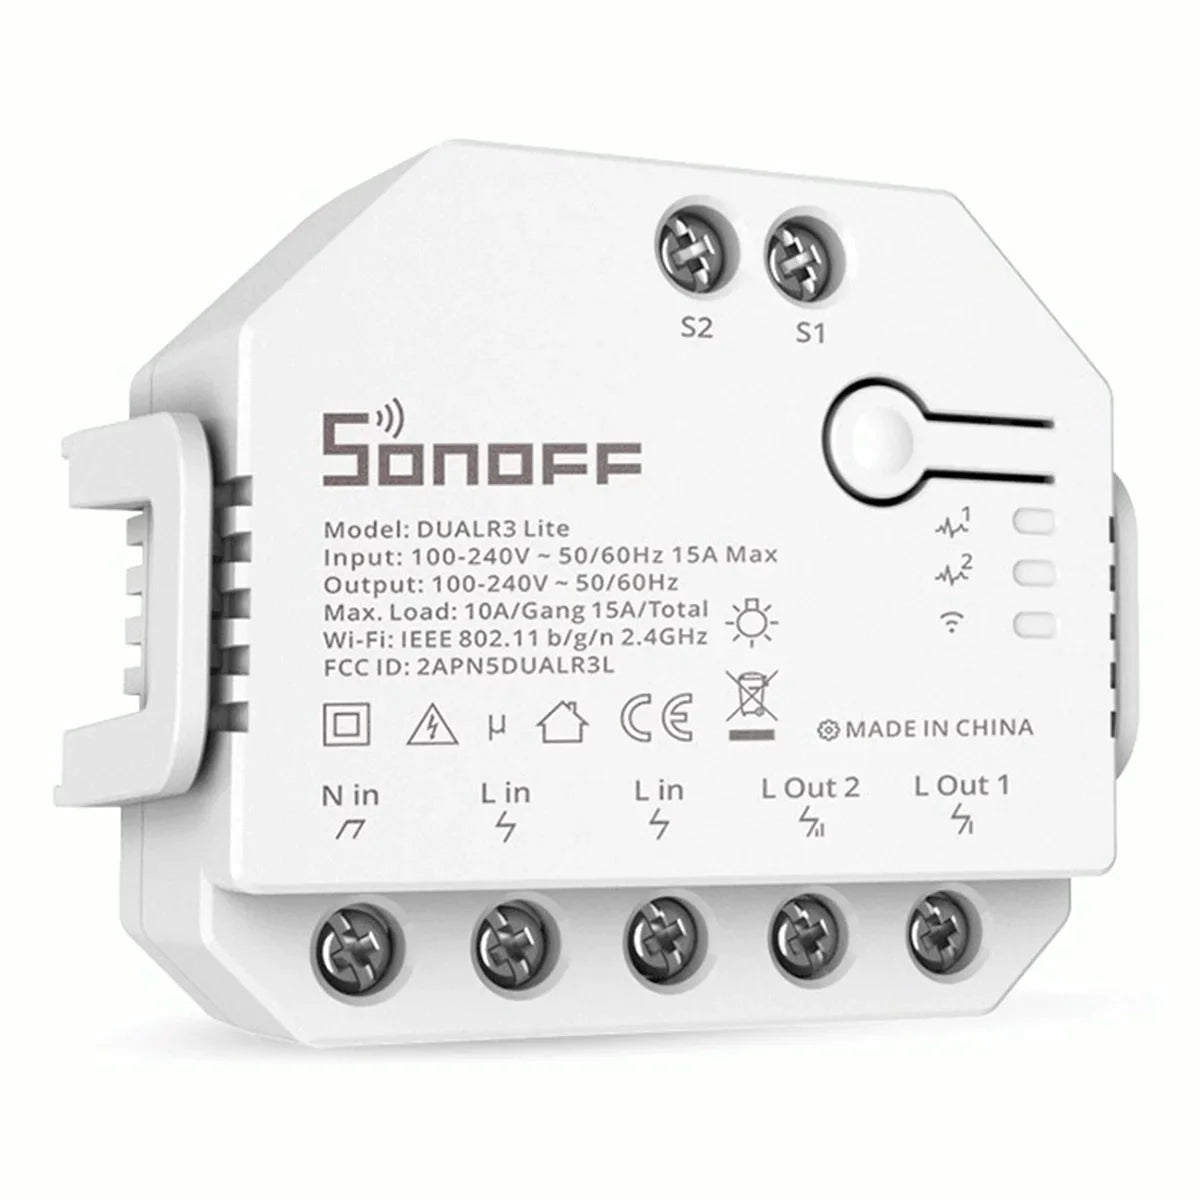 Sonoff Dual R3 Lite Switch w/ wifi energy measurement